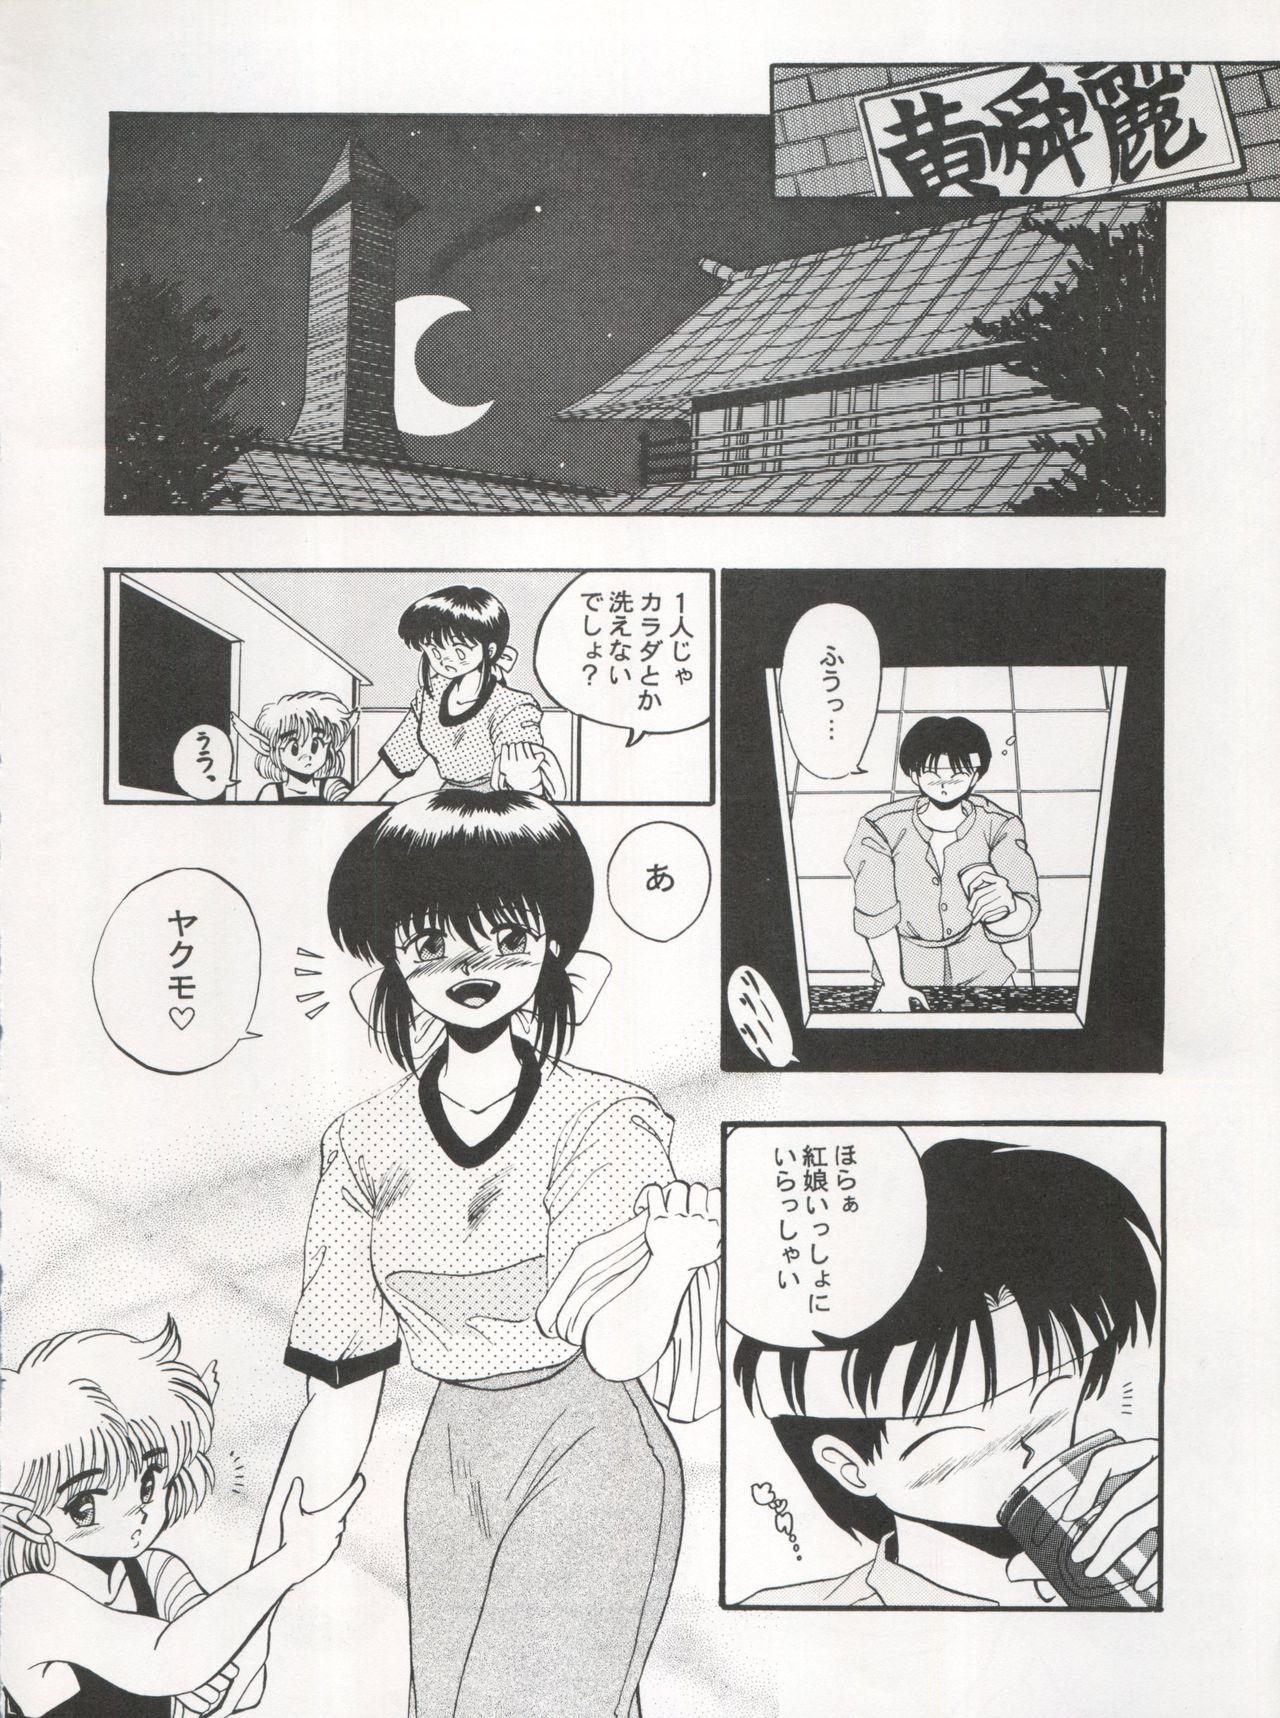 Hindi 逮捕されちゃうぞ - Fushigi no umi no nadia Youre under arrest Minky momo 3x3 eyes Joi - Page 12